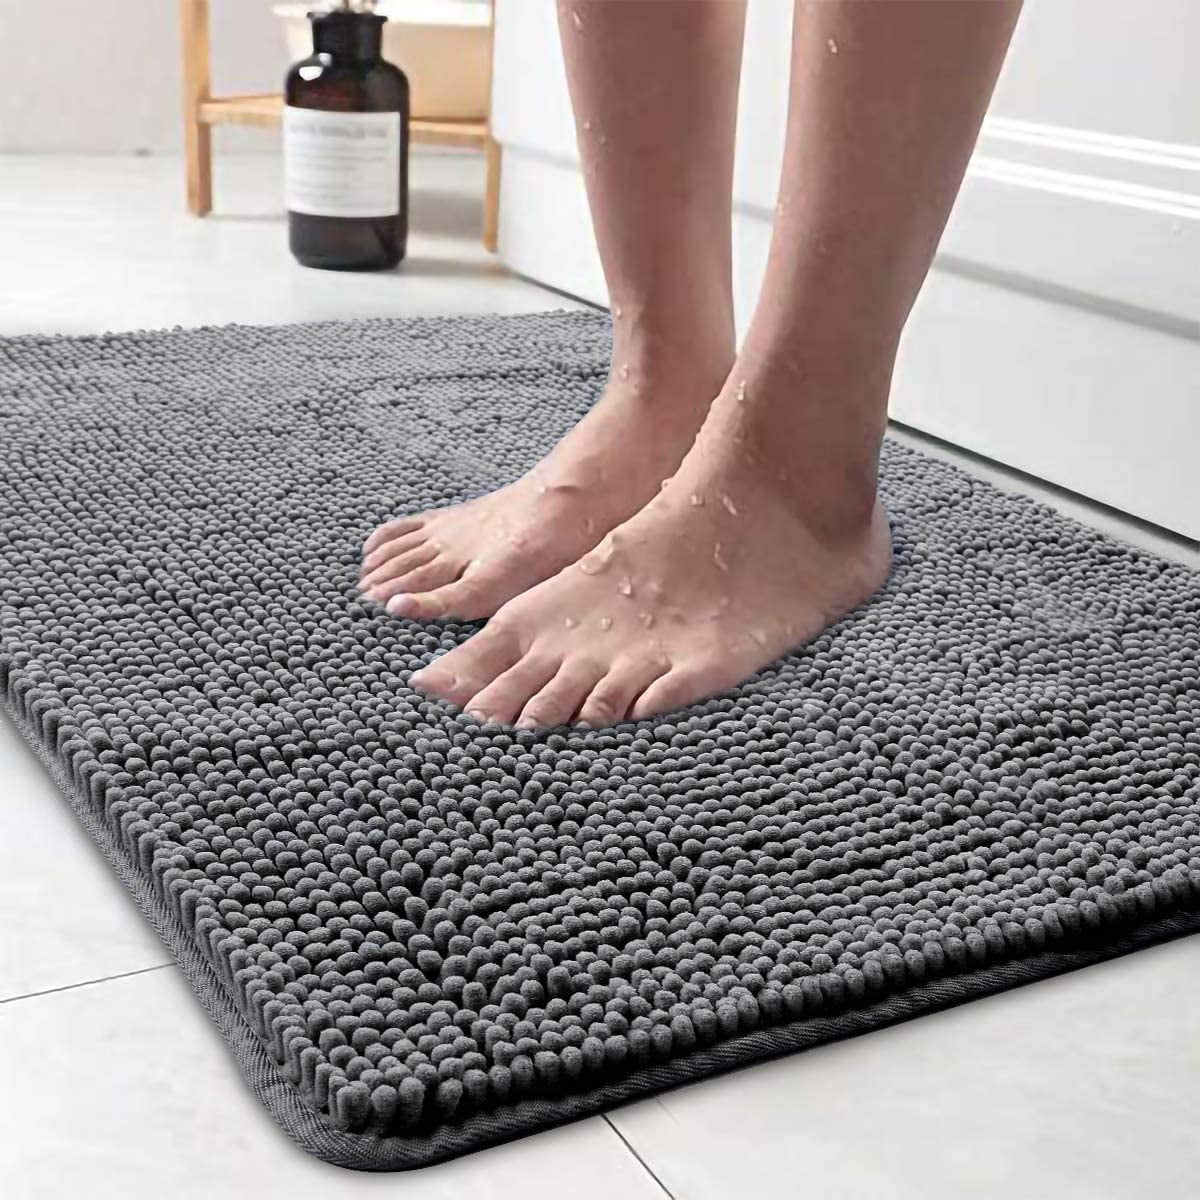 Shower soft feet memory foam bedroom bath bathroom floor carpet plush mat rug 